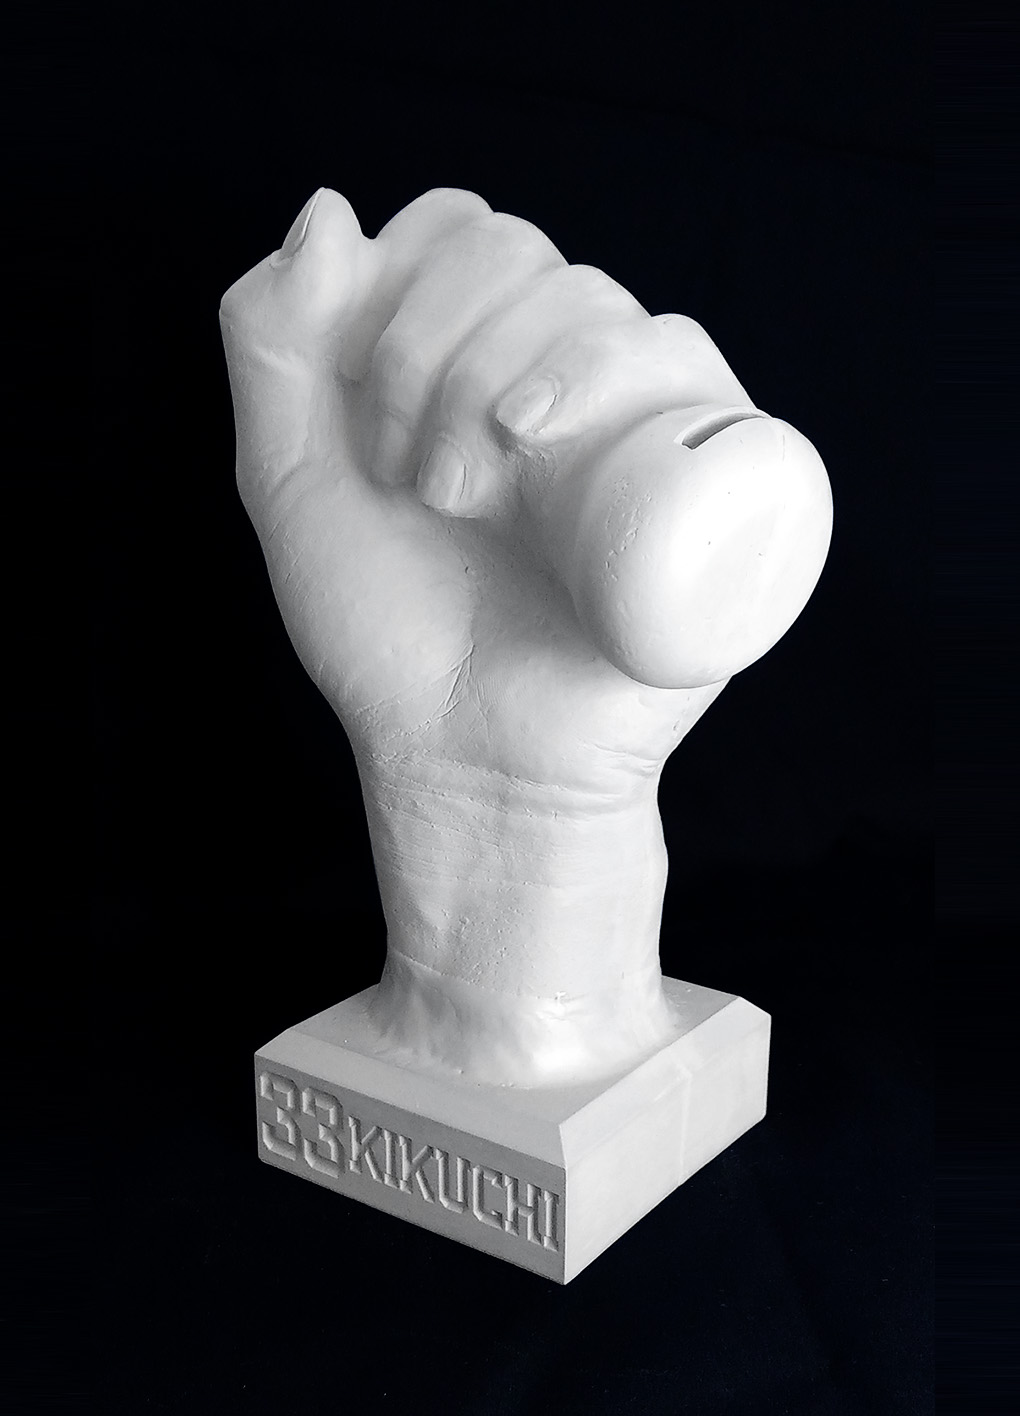 Ryosuke Kikuchi Hand Shaped Piggy Bank (made of resin)